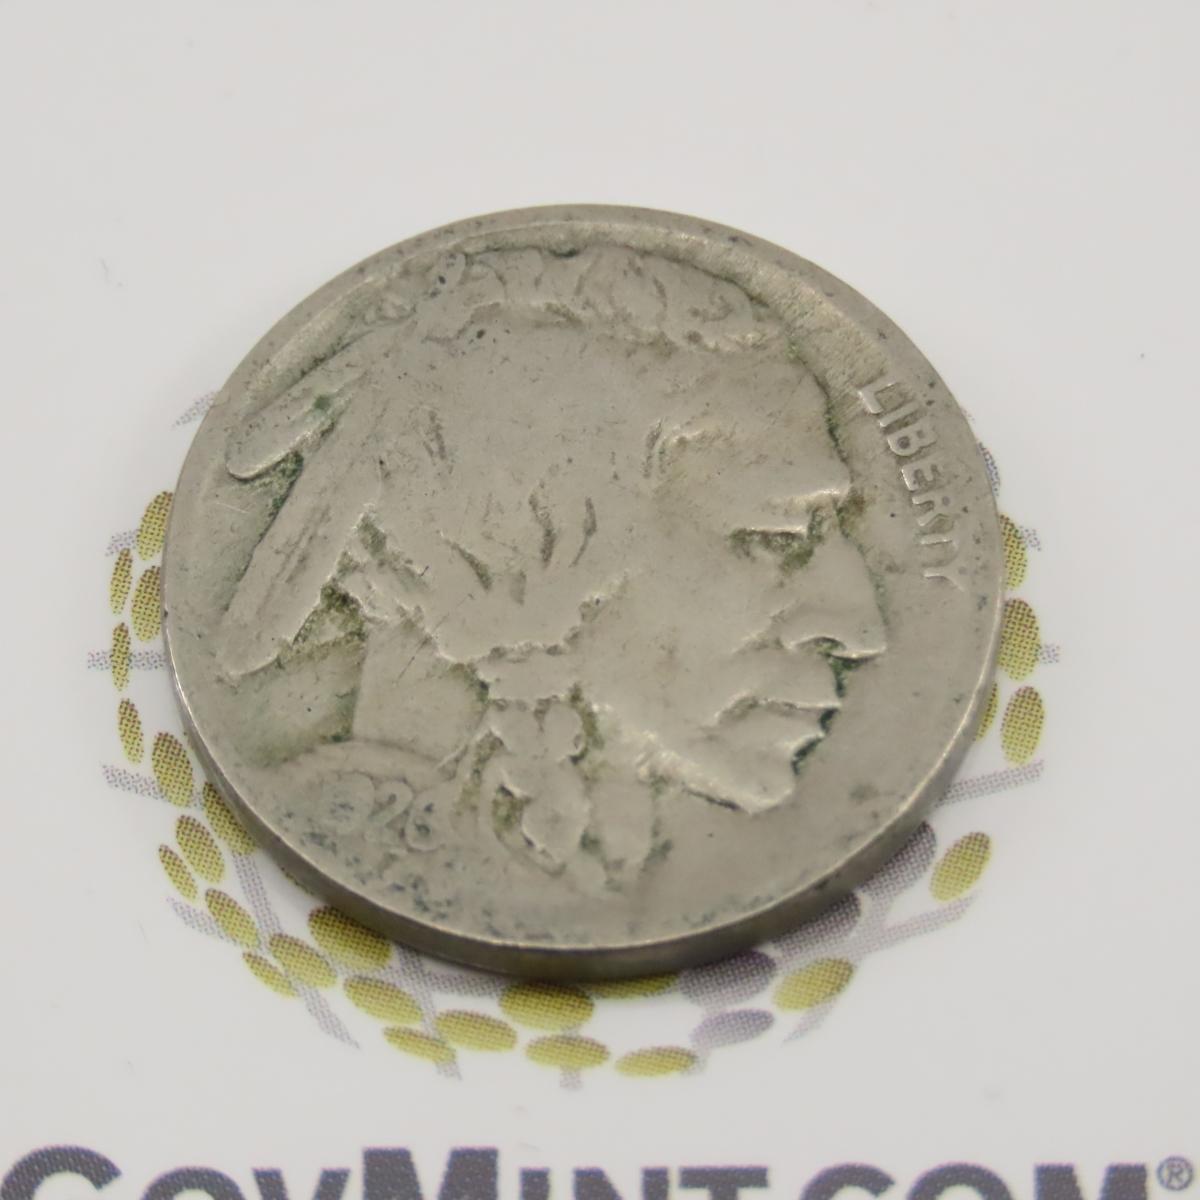 Loose & Graded Liberty V & Buffalo Nickels, Cents